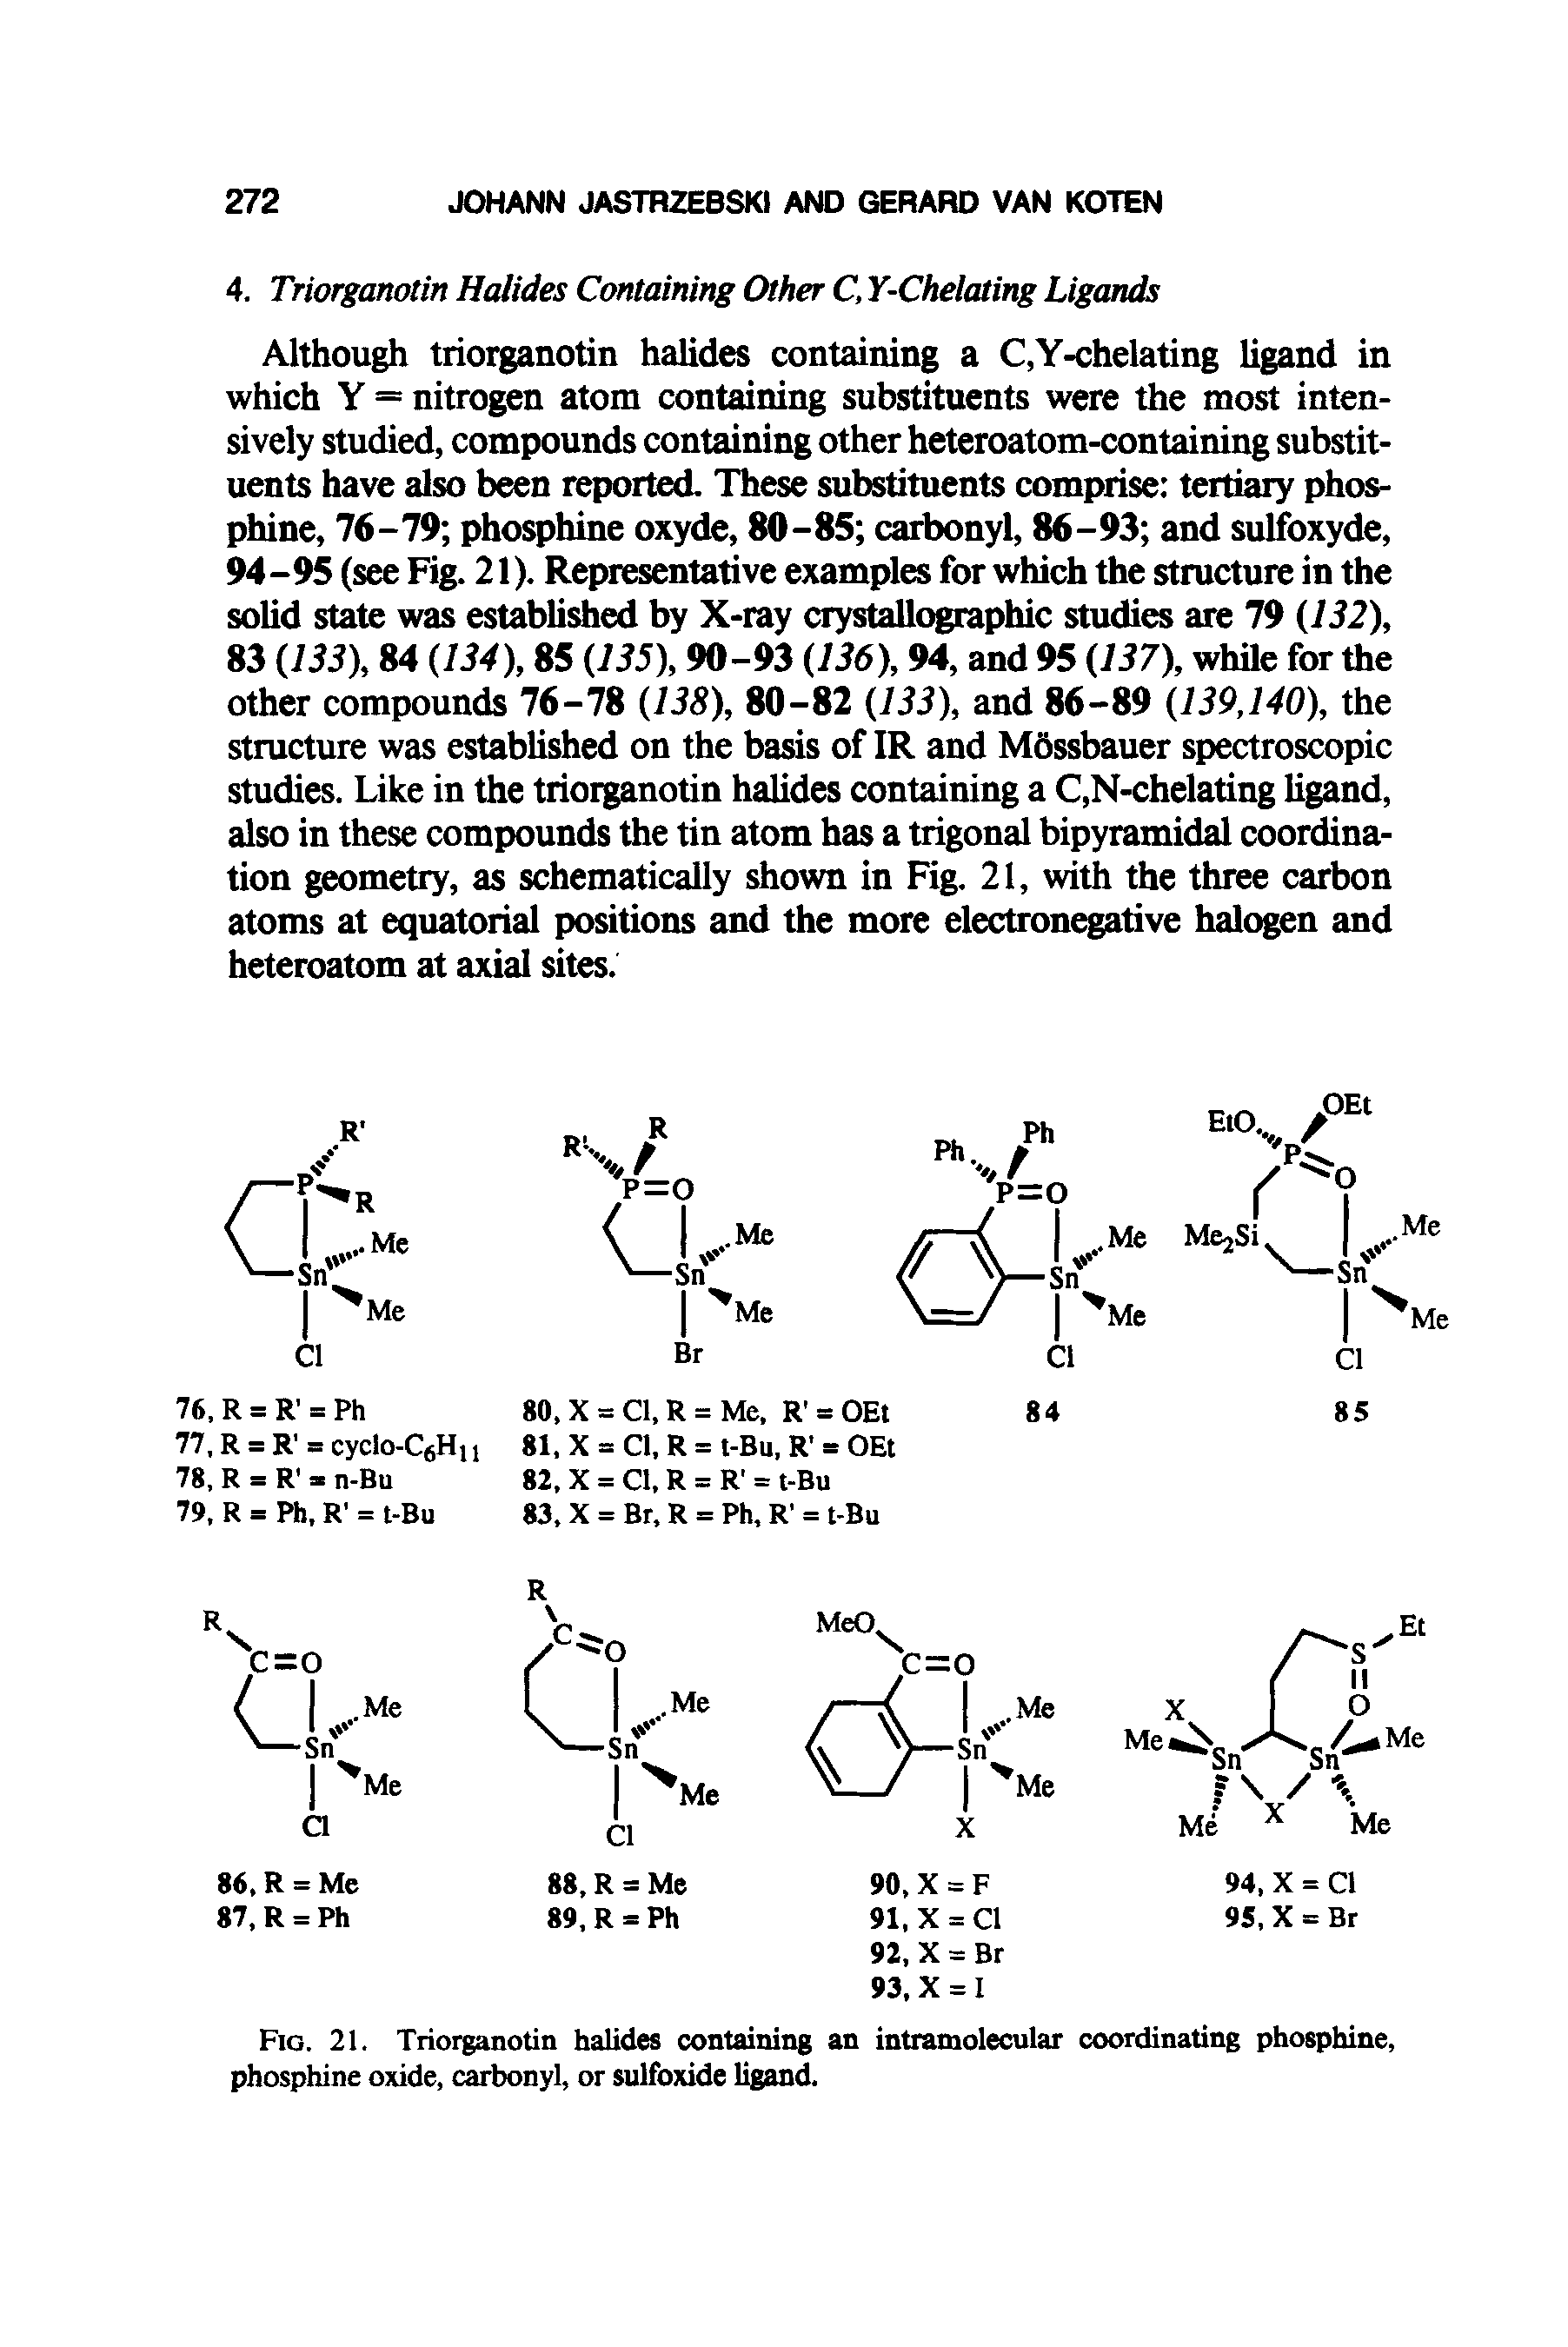 Fig. 21. Triorganotin halides containing an intramolecular coordinating phosphine, phosphine oxide, carbonyl, or sulfoxide ligand.